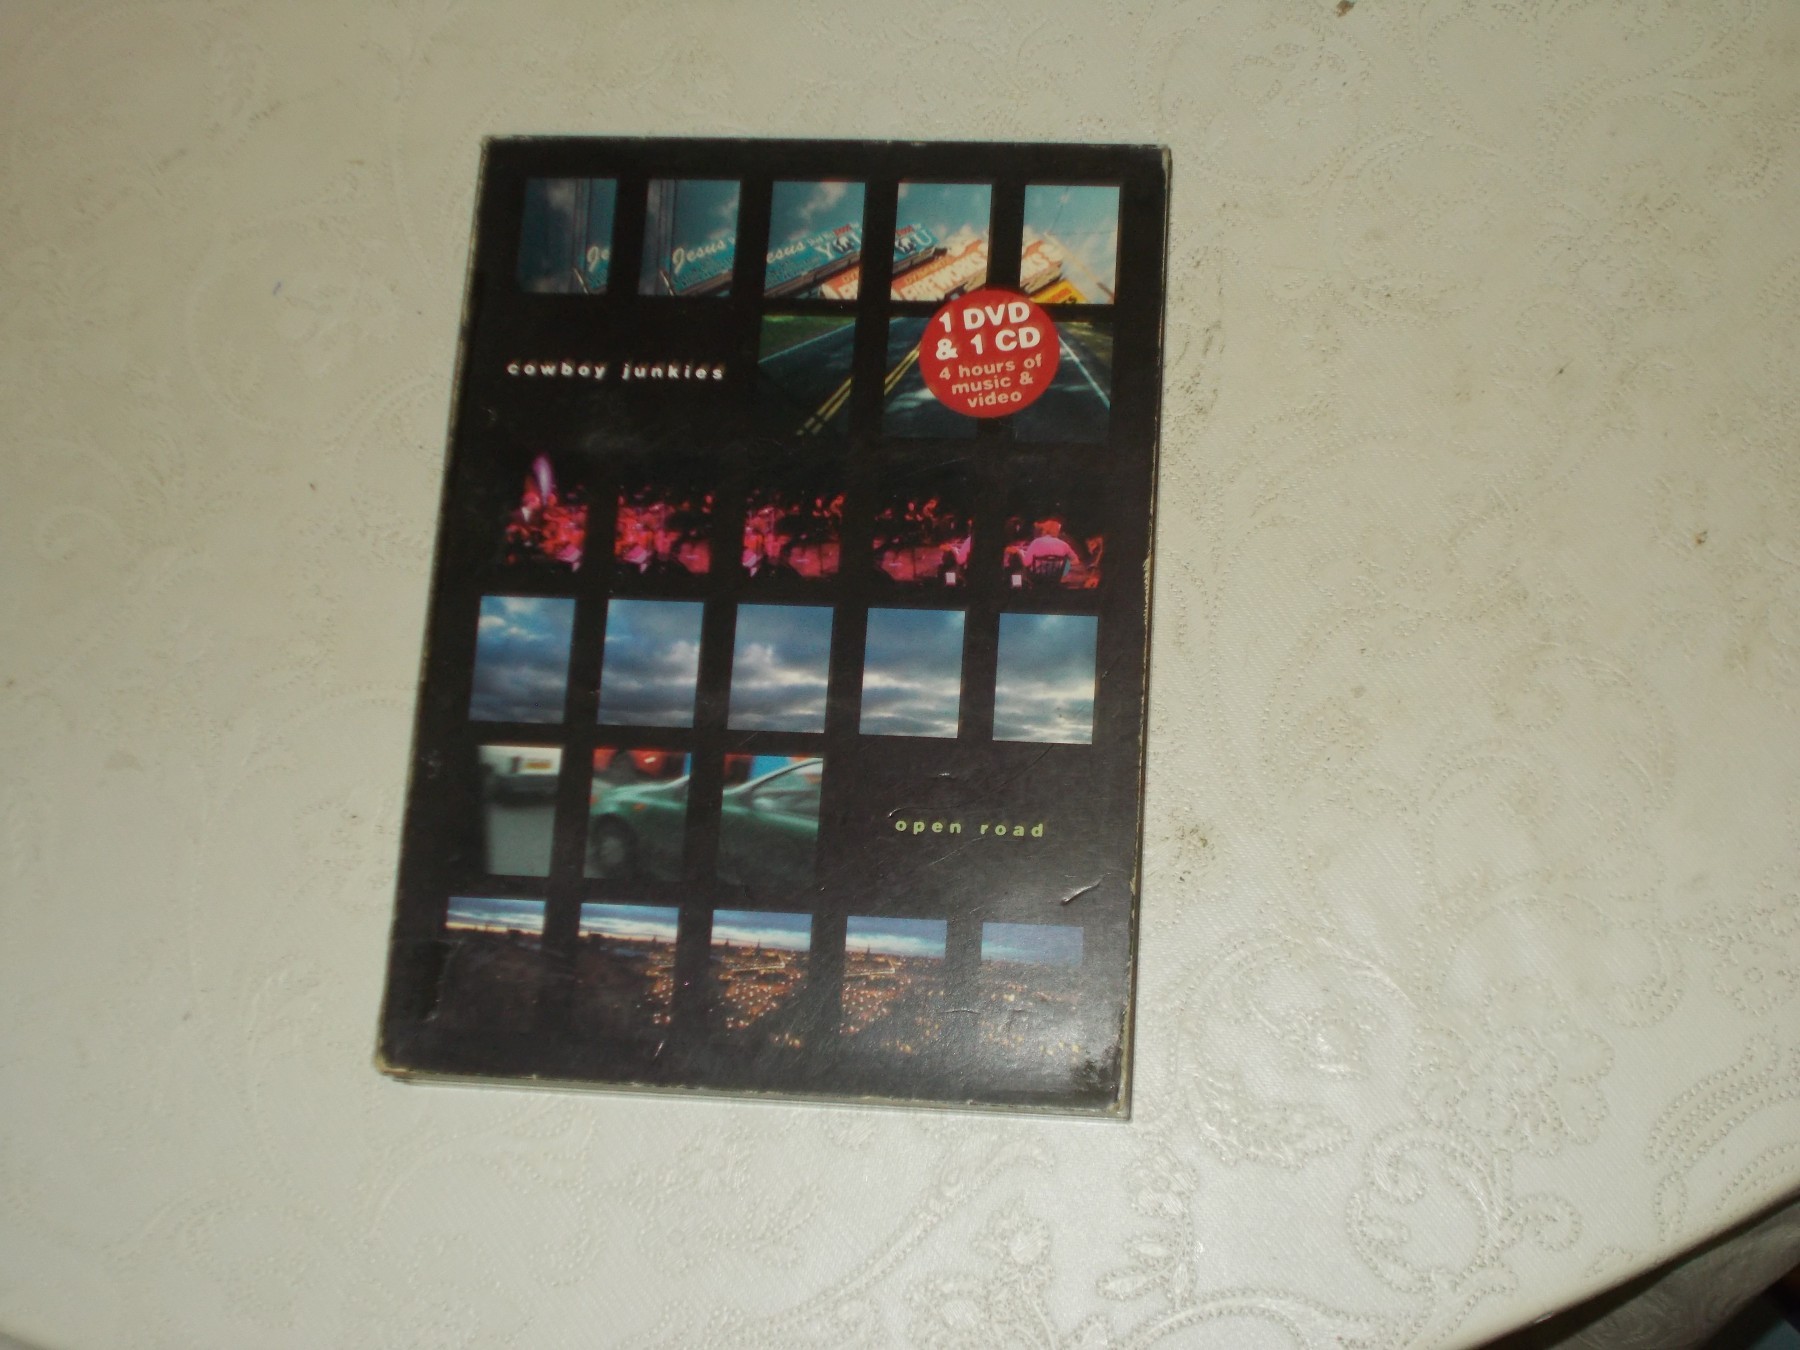 Cowboy Junkies ‎– Open Road CD+DVD - Kupindo.com (55701587)